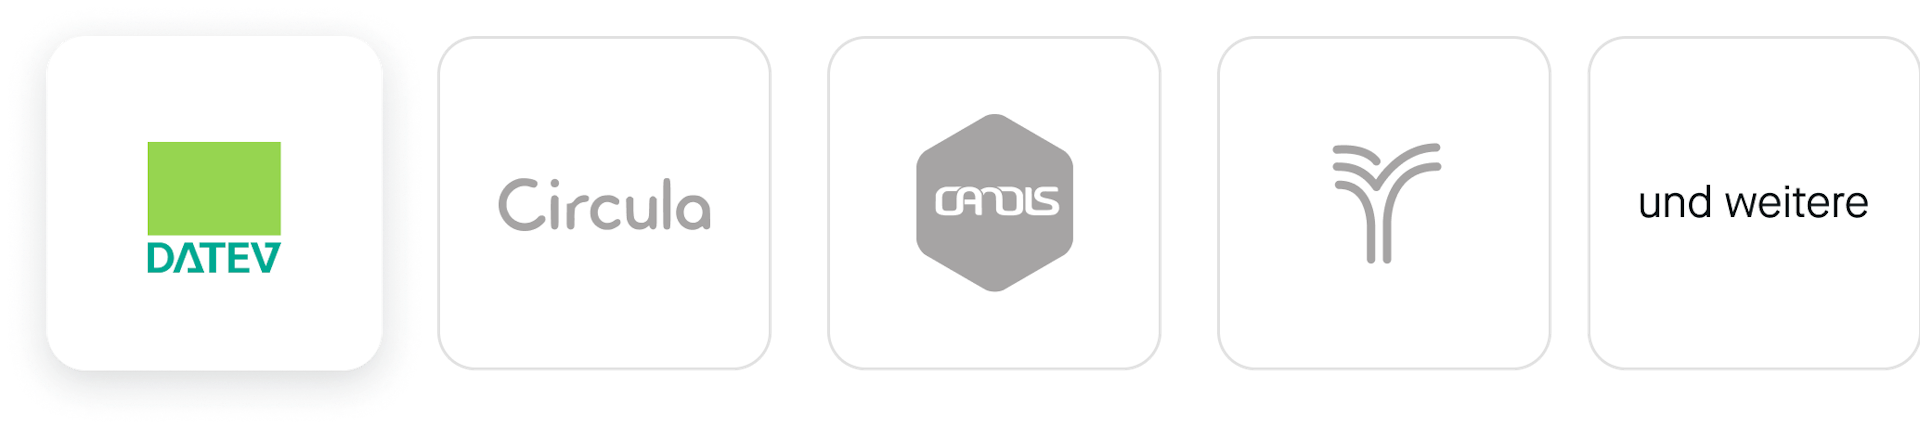 pliant card with cashback partner logos